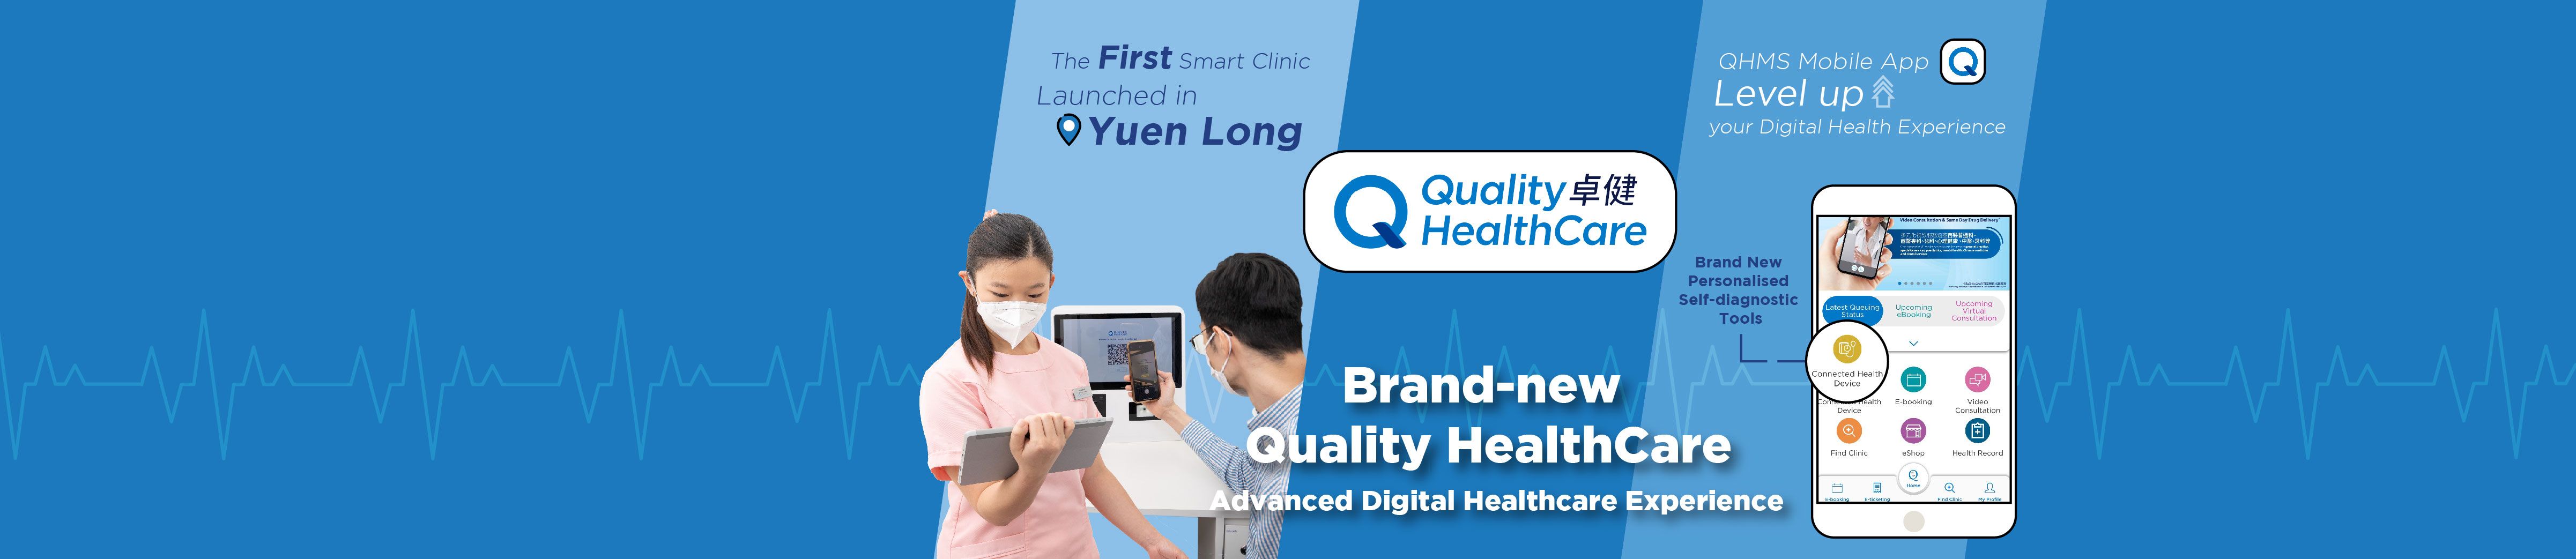 QHMS Website Banner 2022_New Brand ID_EN